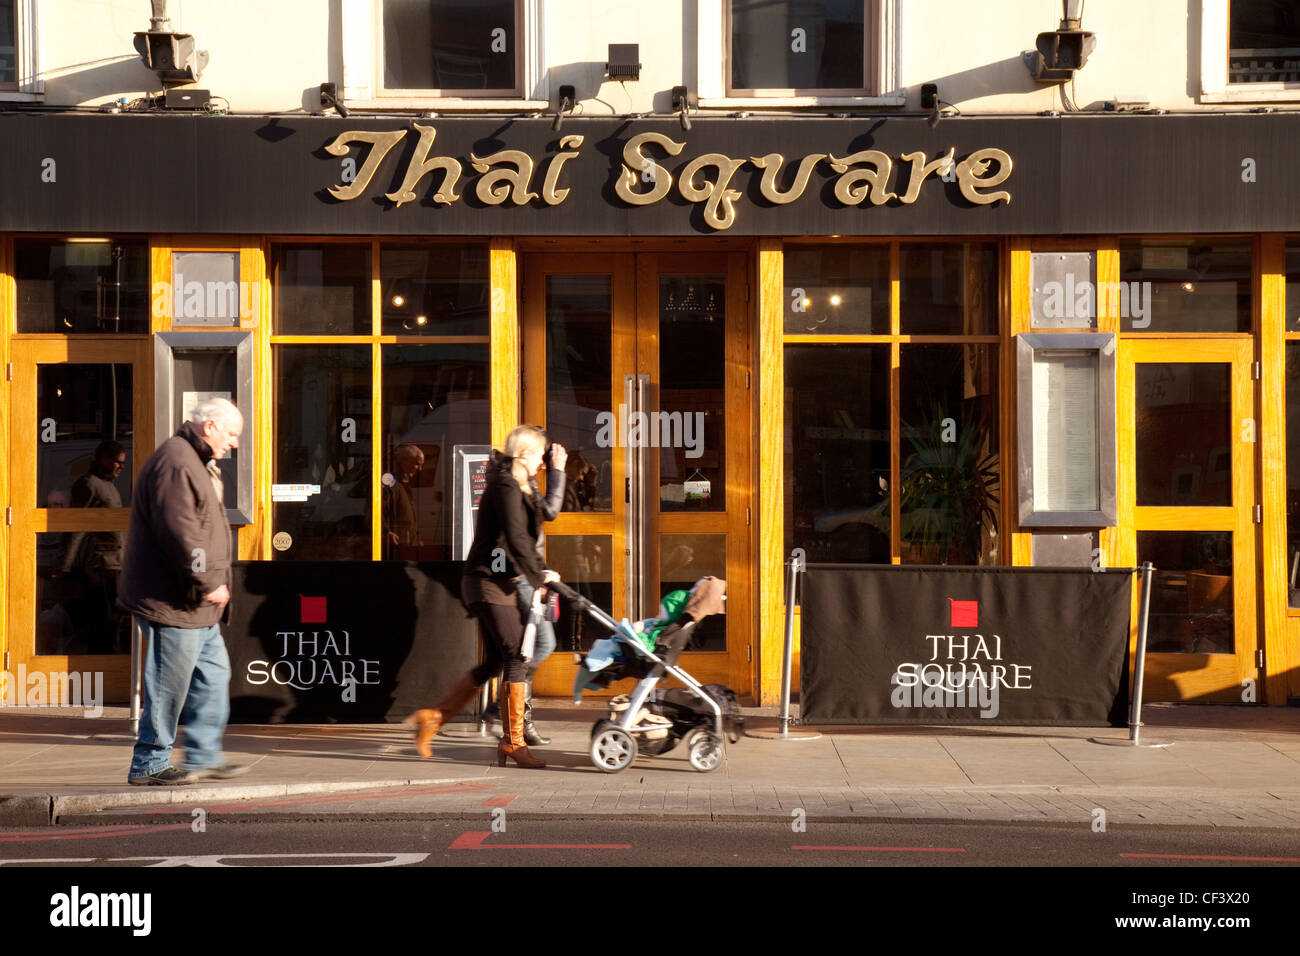 Thai Square restaurant, Islington, North London, UK Stock Photo